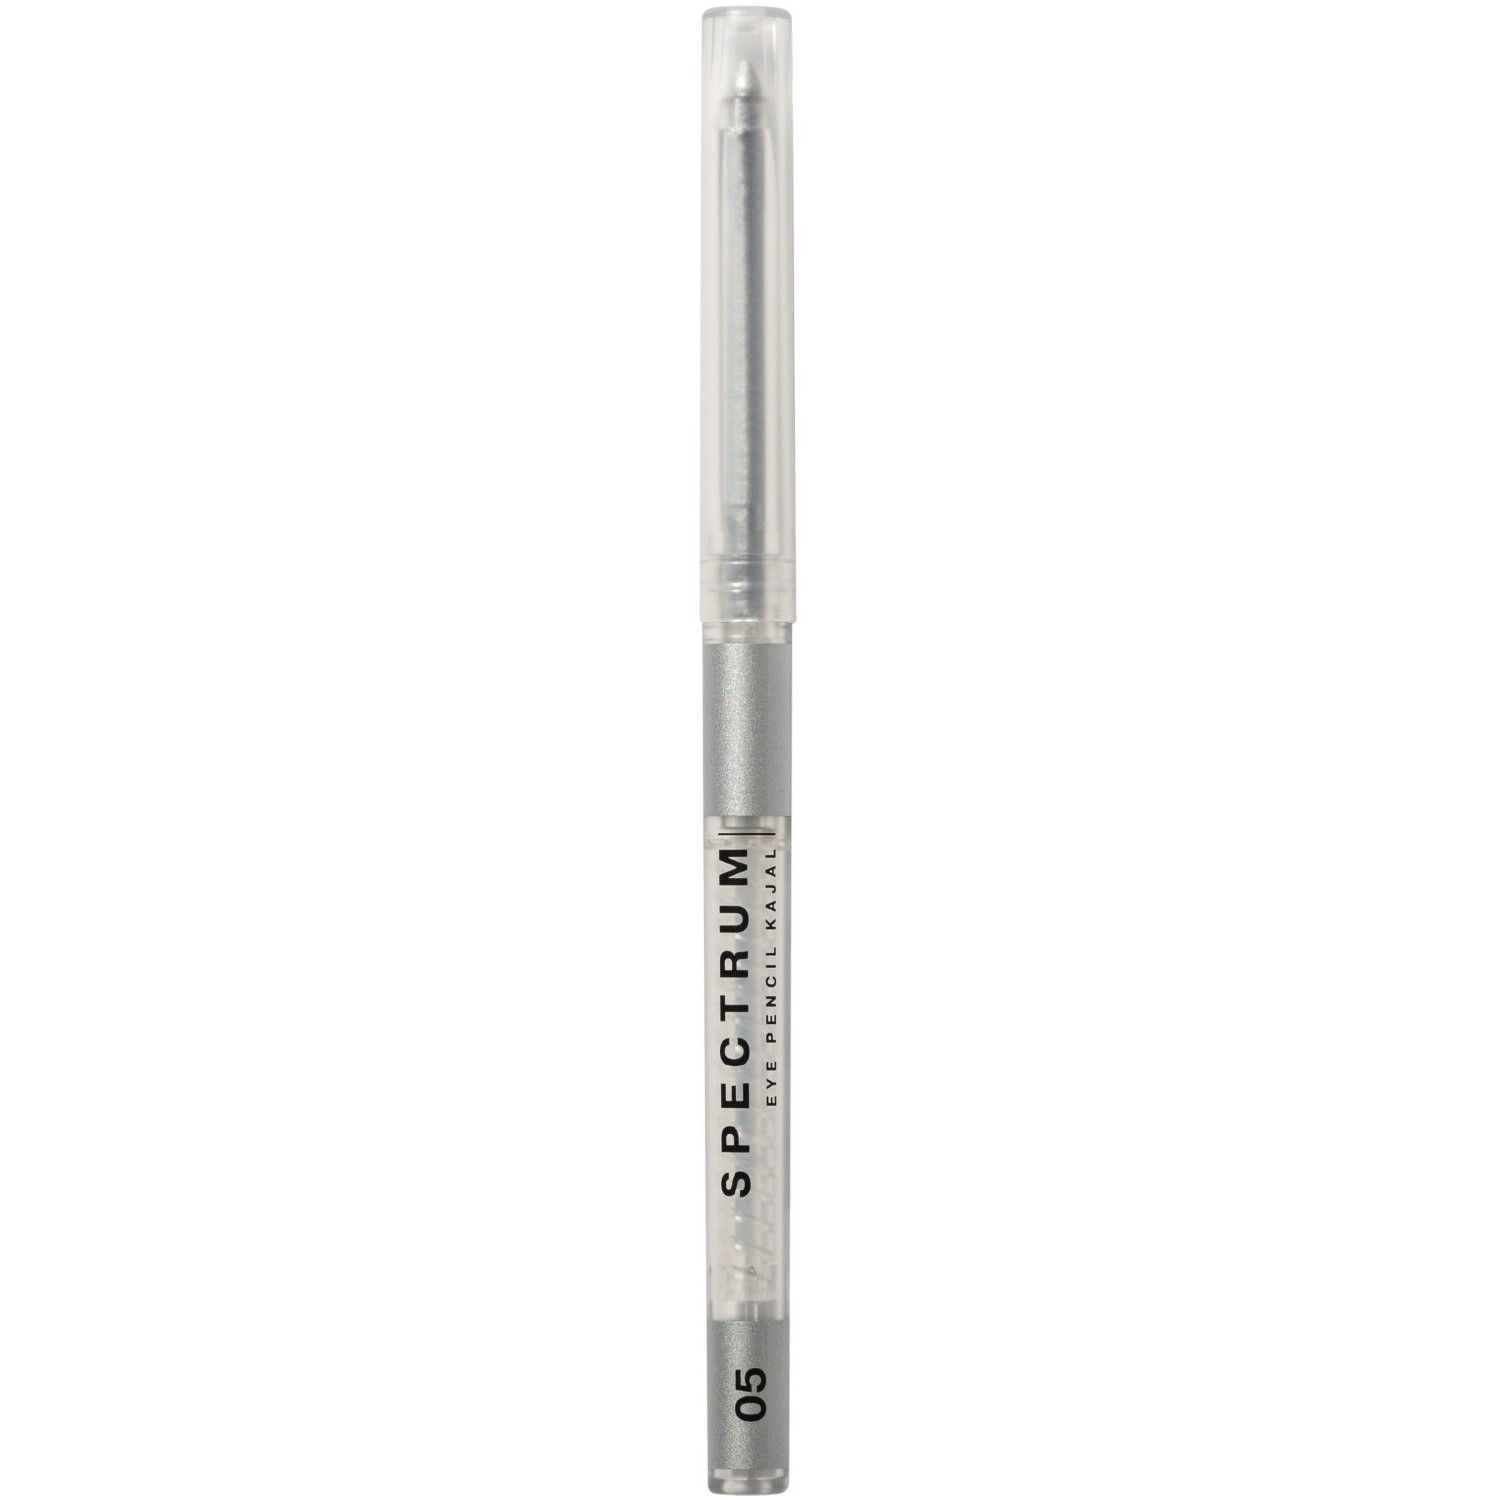 Карандаш для глаз Influence Beauty Spectrum автоматический, гелевый тон 05 0,28 г карандаш для глаз influence beauty spectrum автоматический тон 01